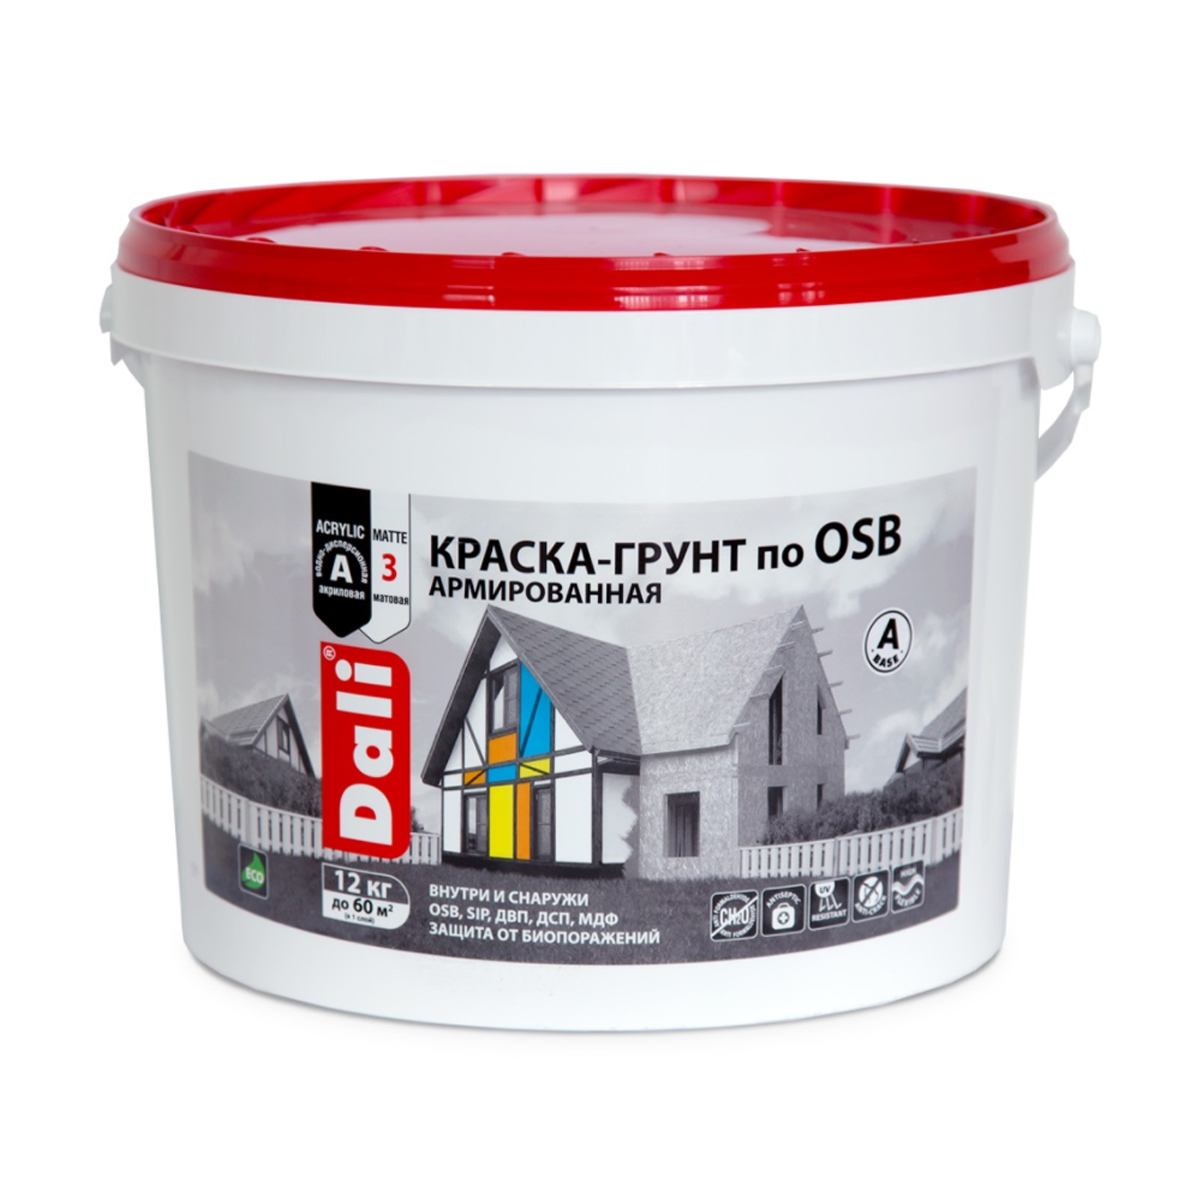 Краска-грунт по OSB Dali, армированная, матовая, база A, белая, 12 кг грунт для плит osb neomid 1кг н грунтosb 1